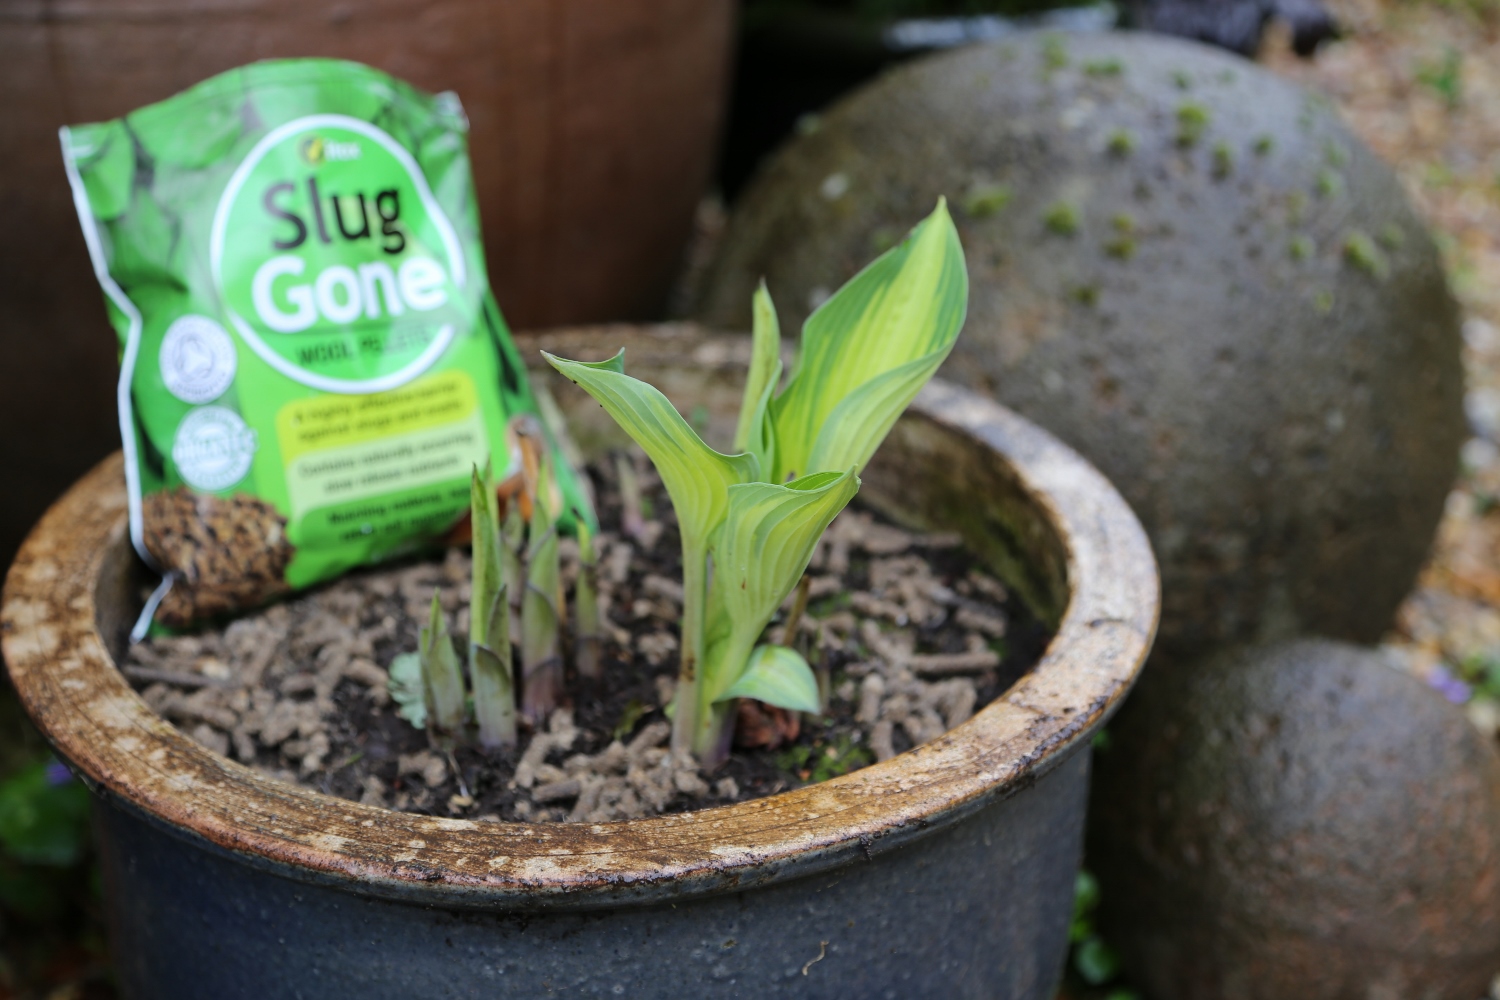 Slug Gone in plant pot